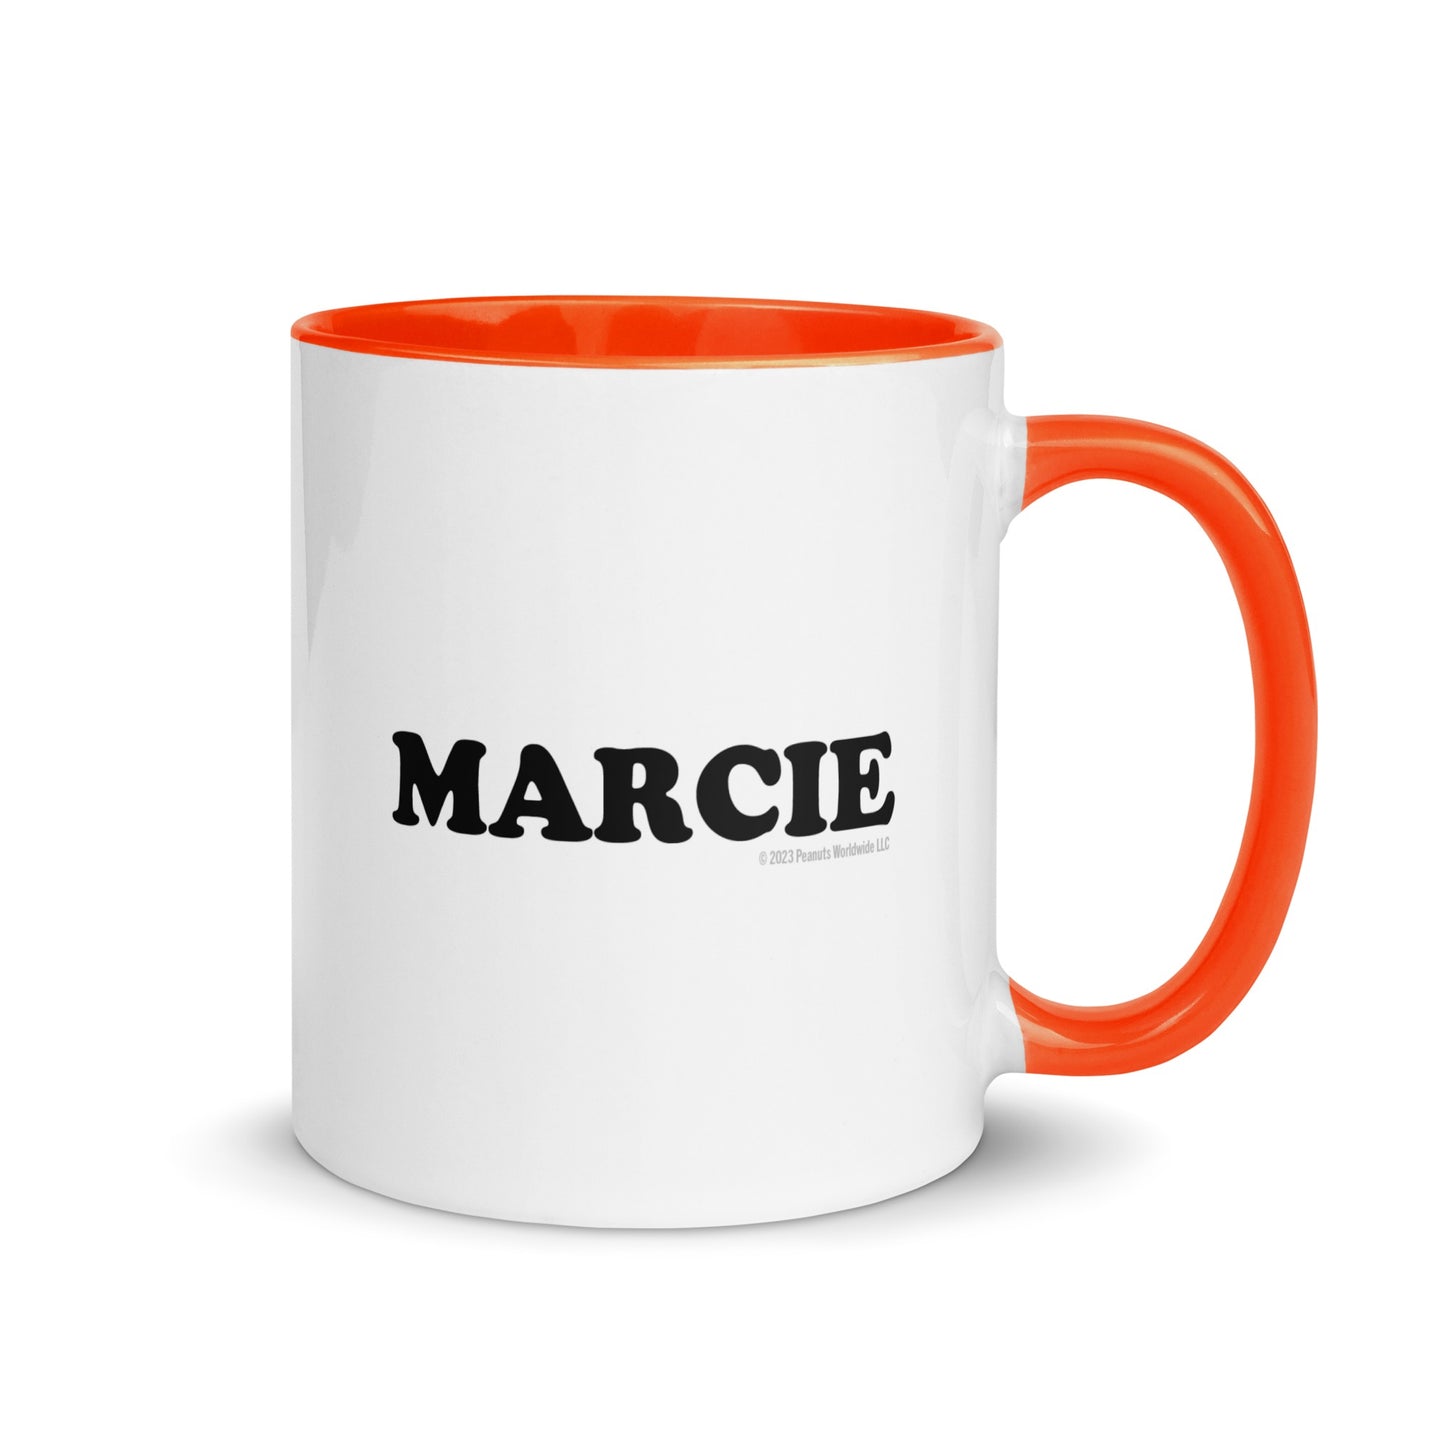 Marcie Two-Tone Mug